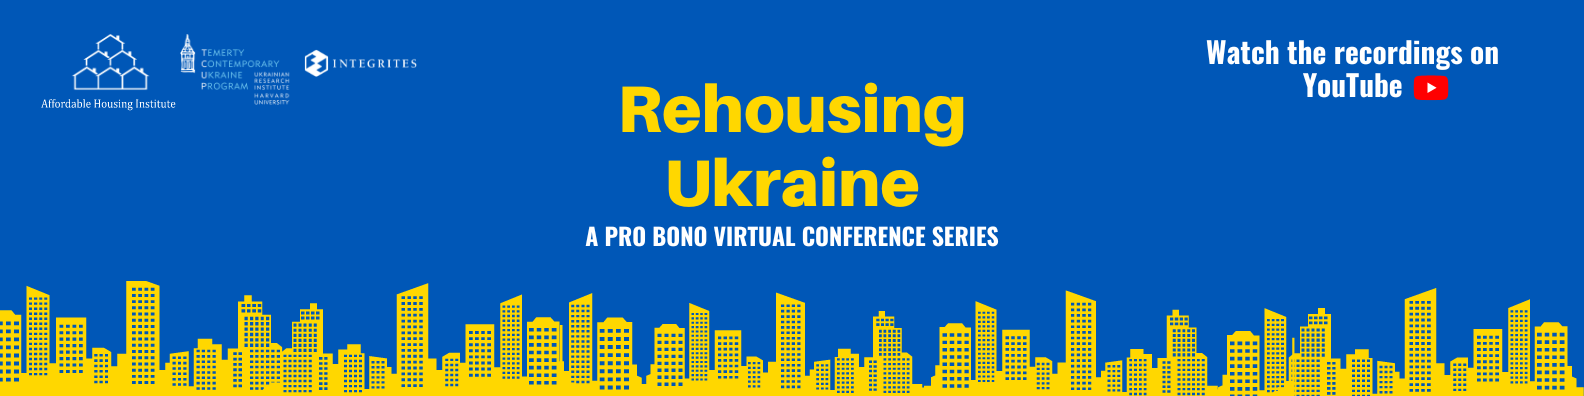 Rehousing Ukraine: A pro bono virtual conference series. watch recordings on YouTube